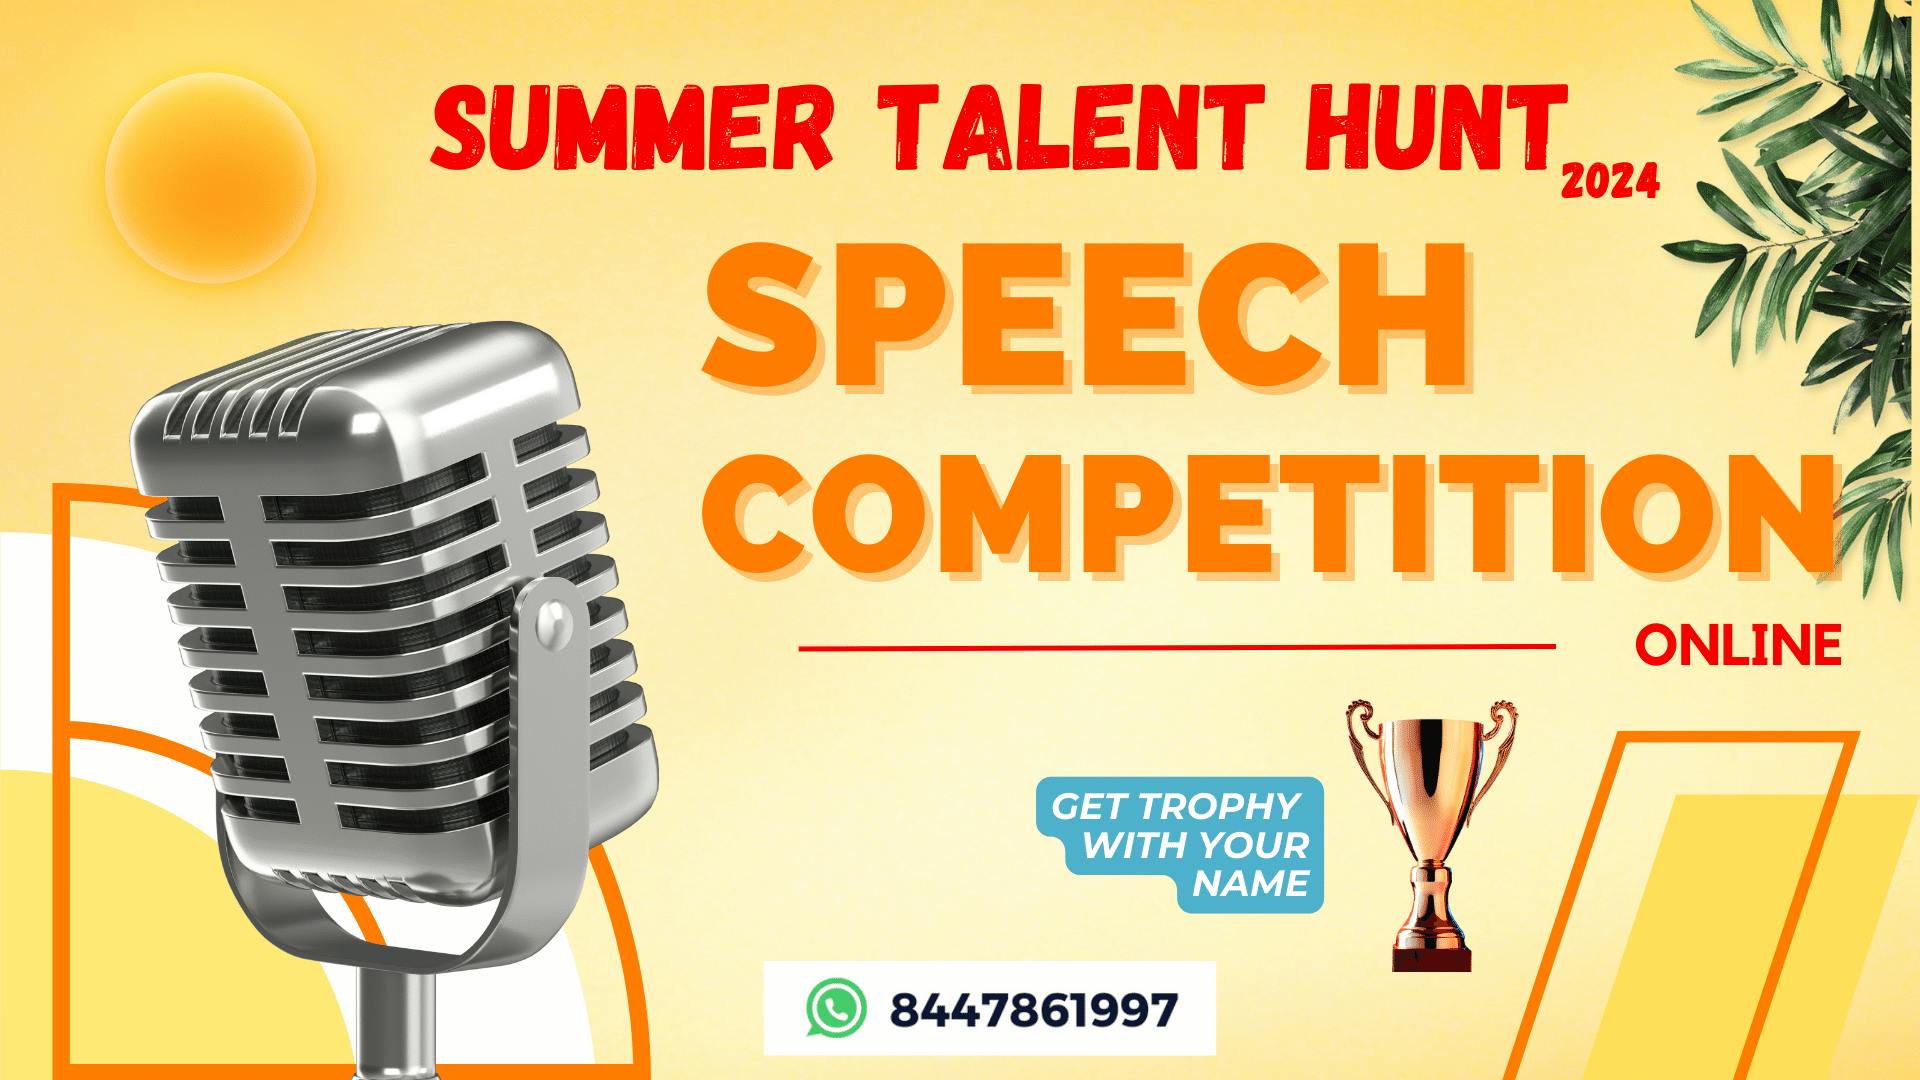 National Speech Competition - Summer Talent Hunt 2024